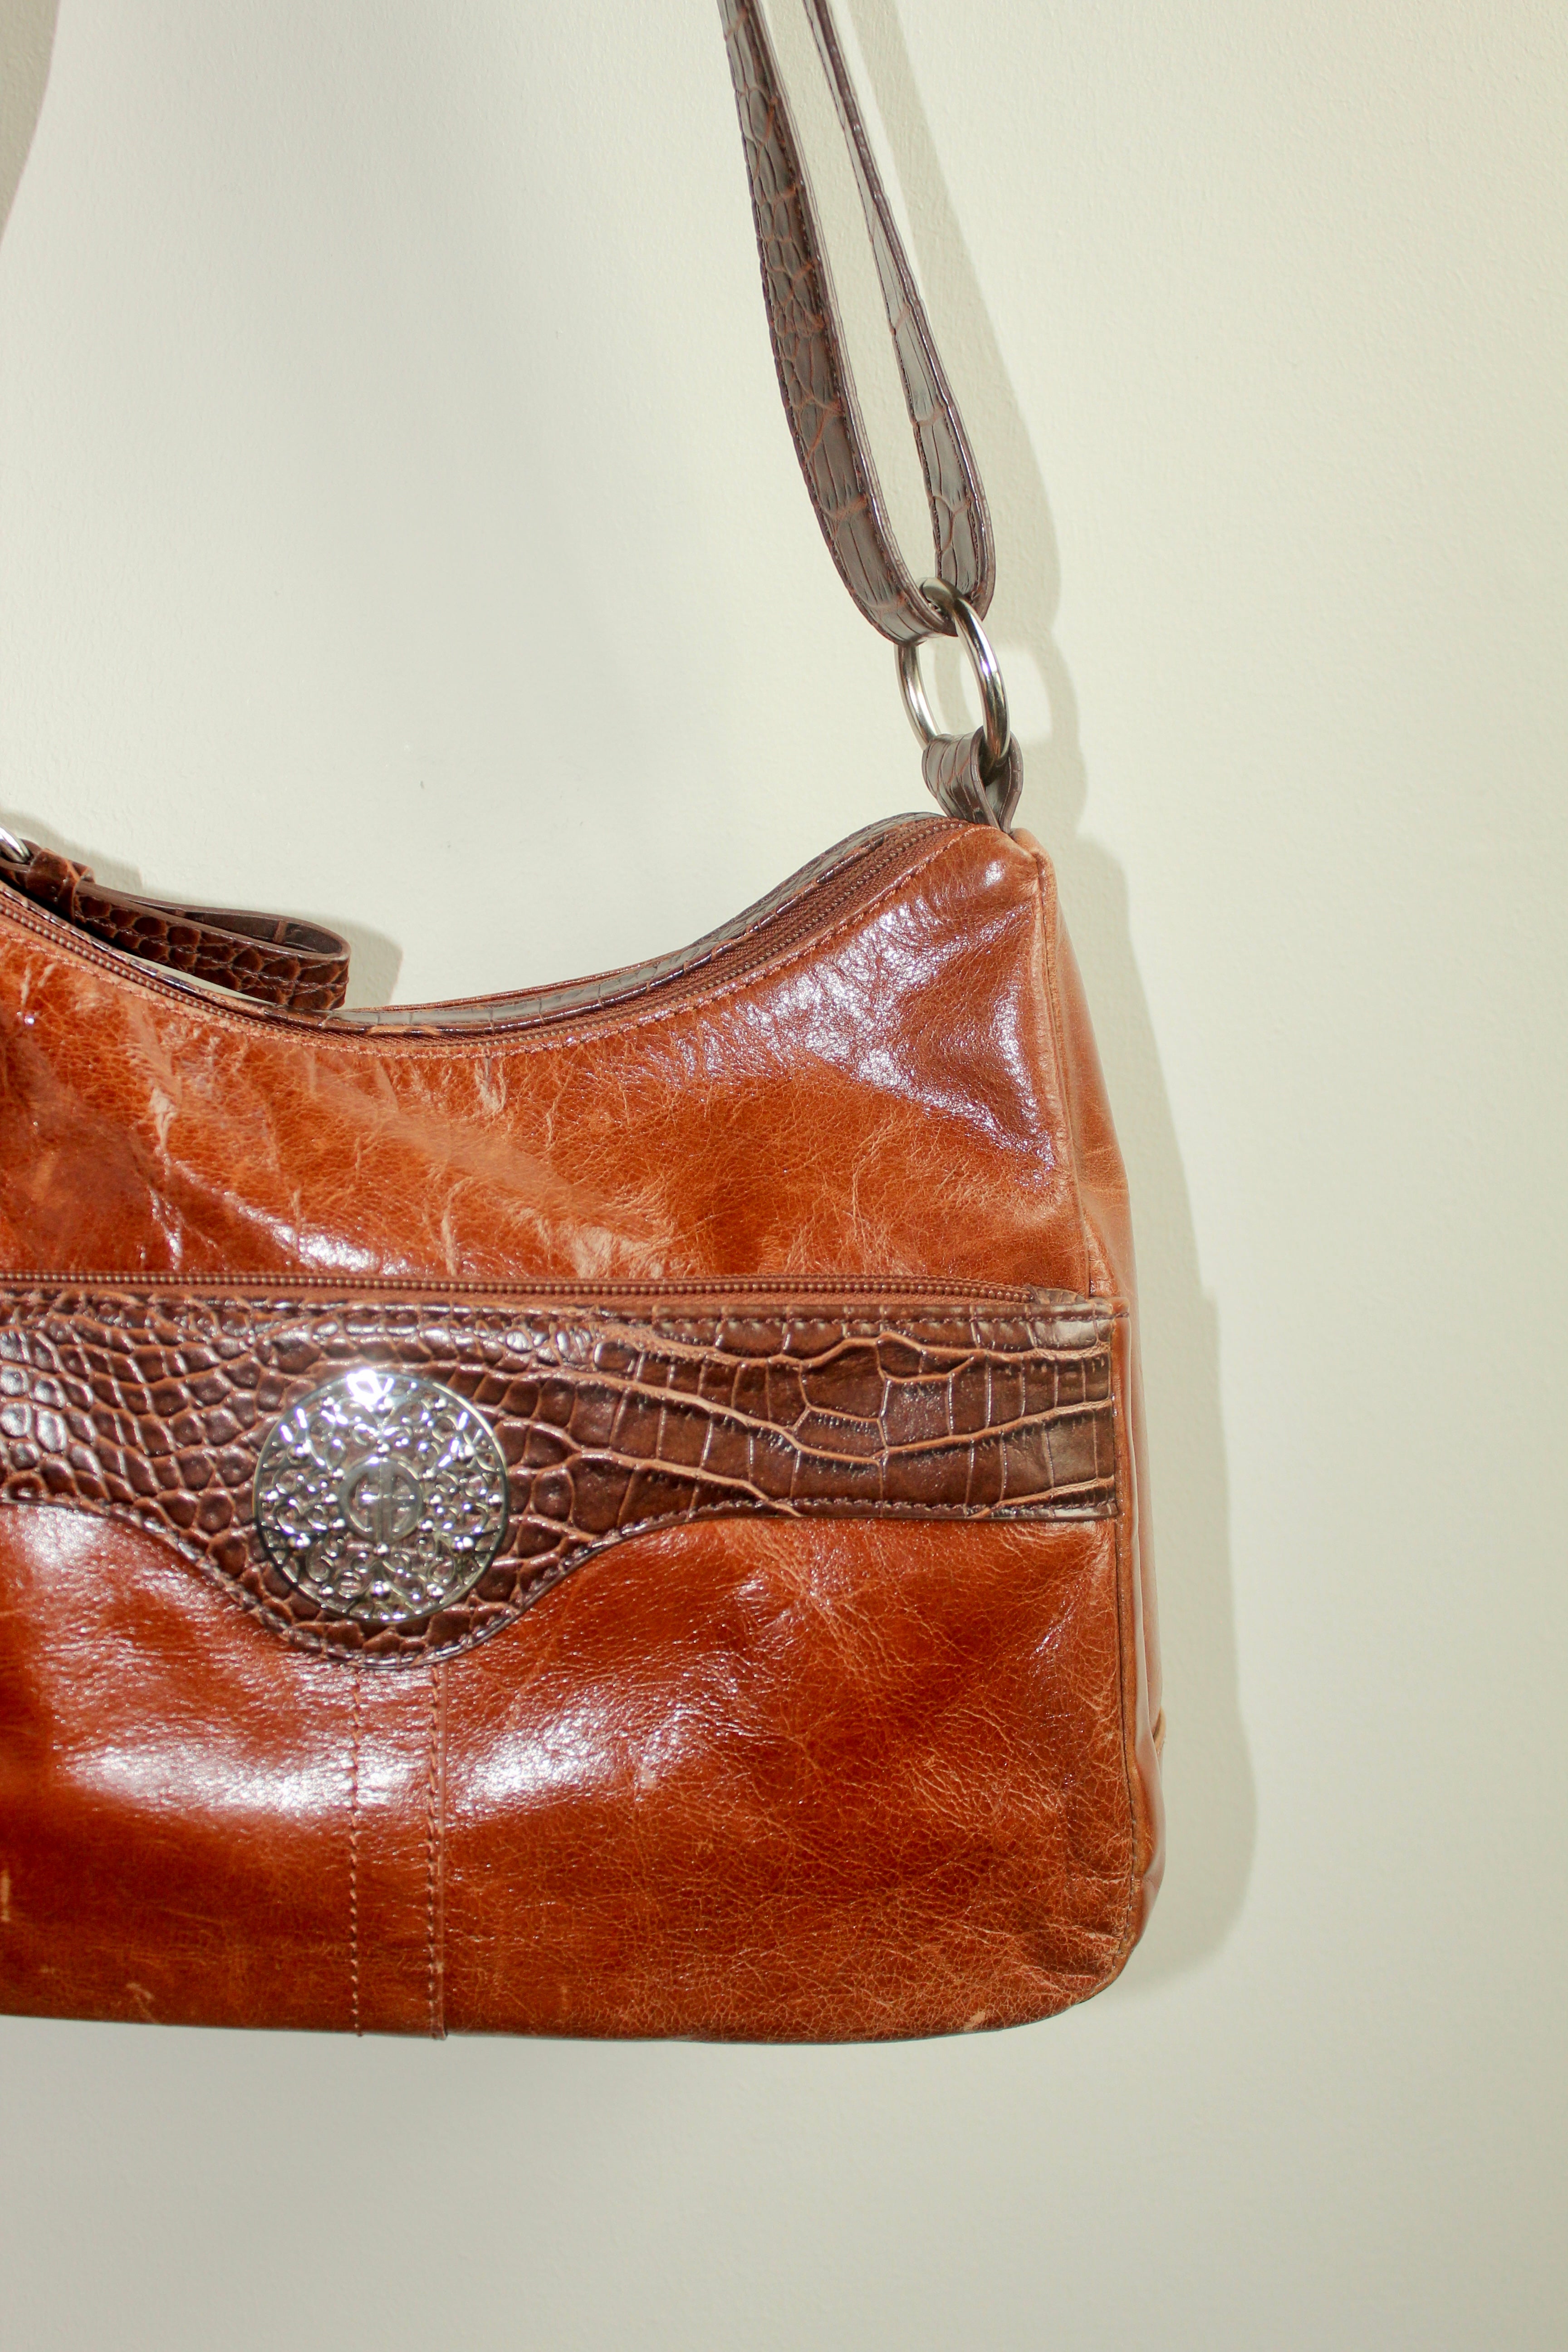 Vintage Giani Bernini Leather Bag